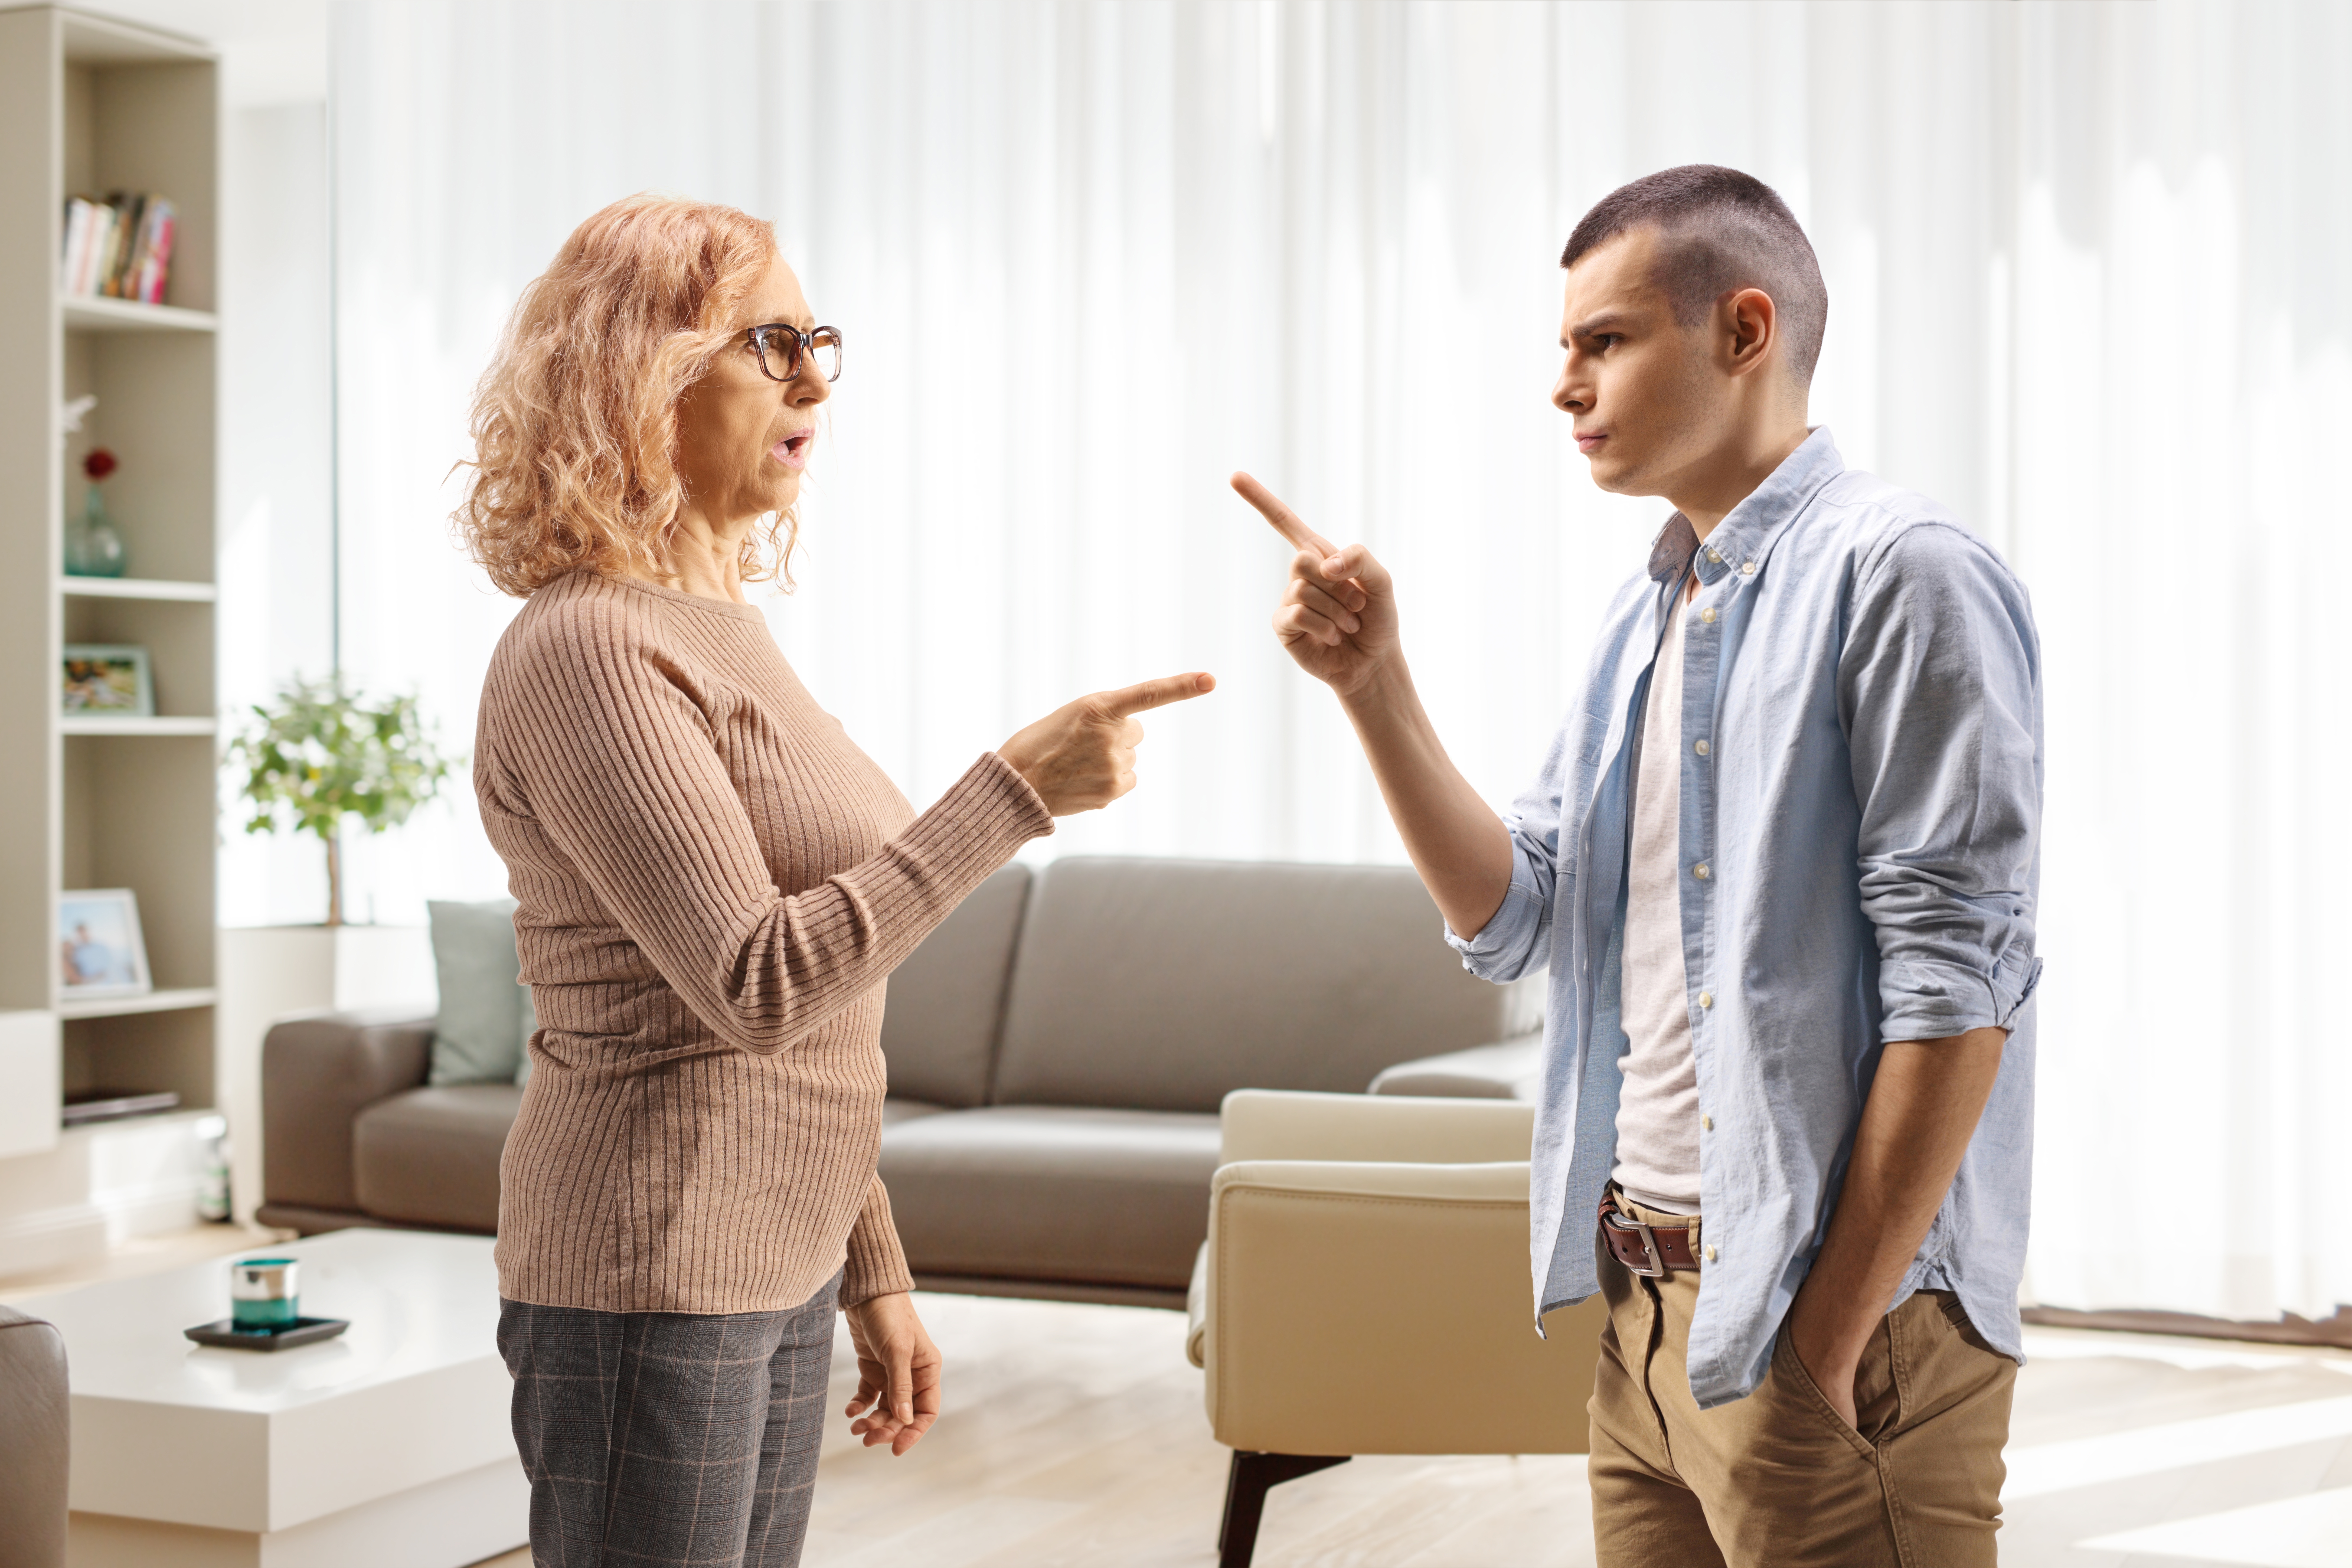 Mère et fils en train de se disputer | Source : Shutterstock